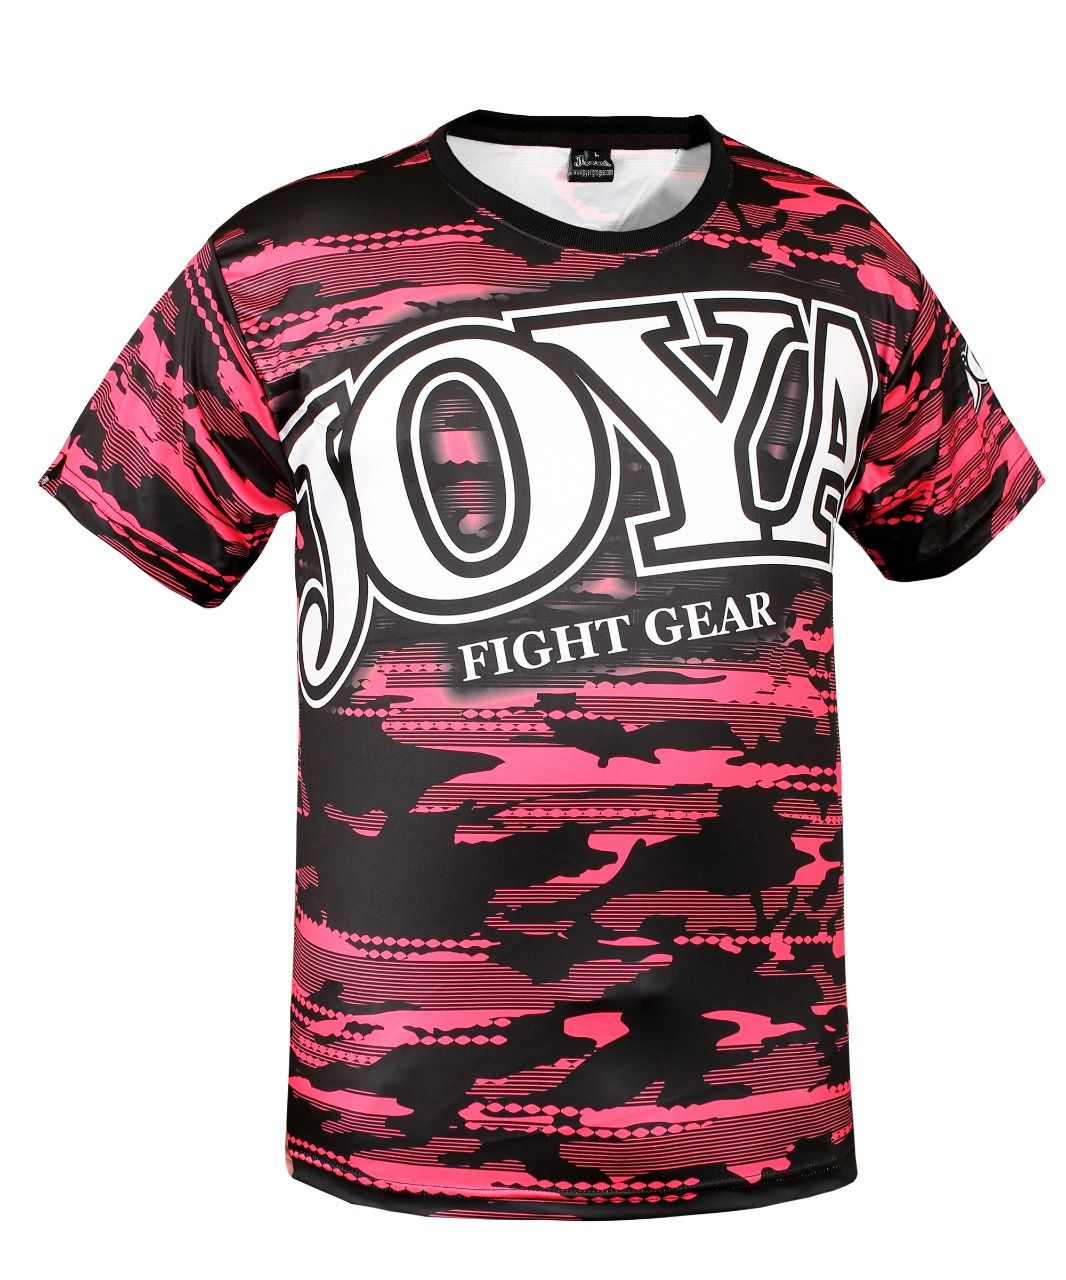 joya_camo_v2_t-shirt_-_pink_1.jpg